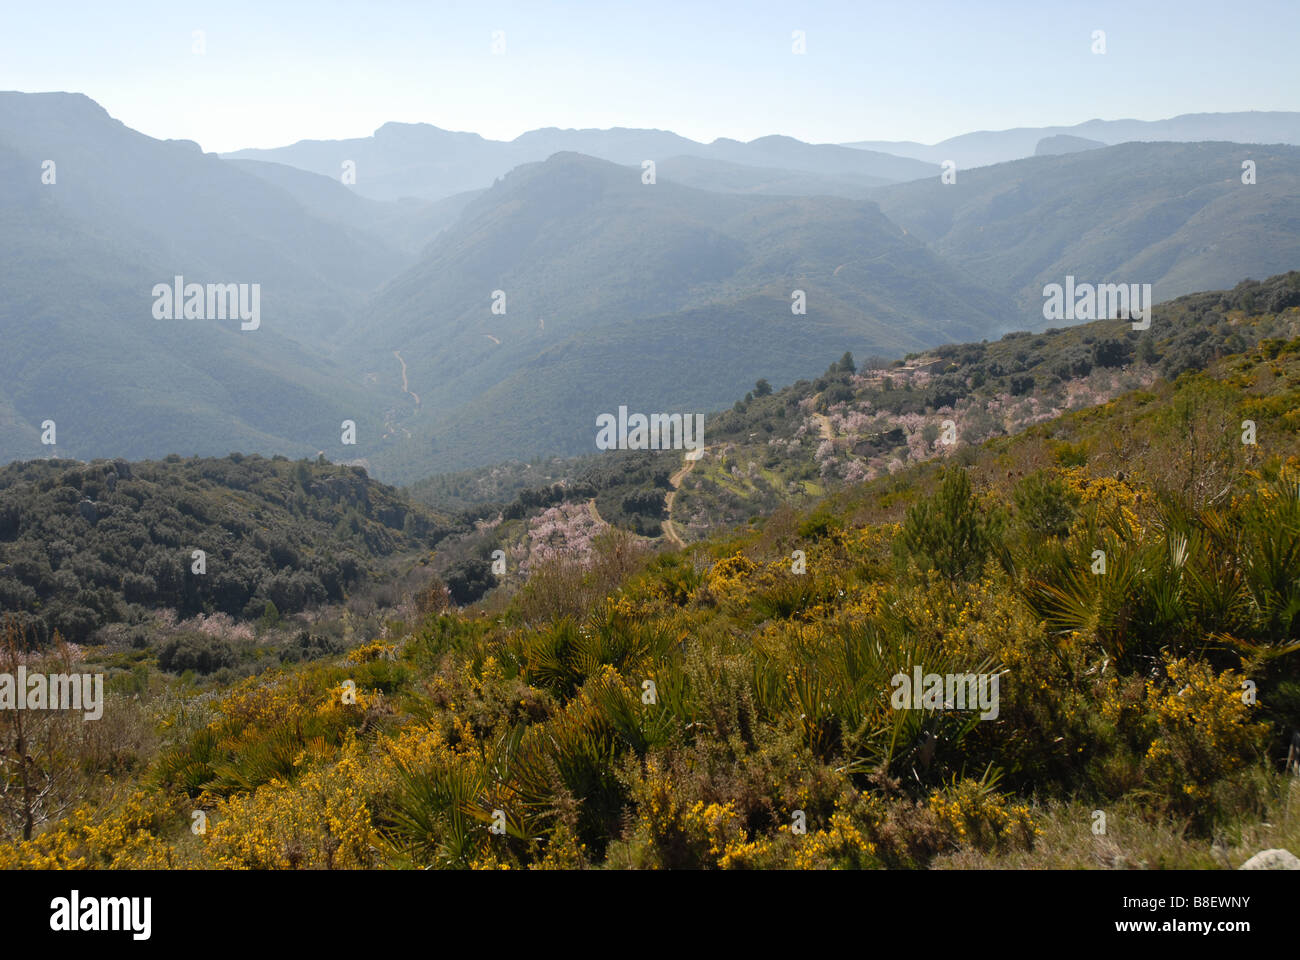 gorse, almond orchards and mountains, near Benimaurell, Vall de Laguar, Alicante province, Comunidad Valenciana, Spain Stock Photo